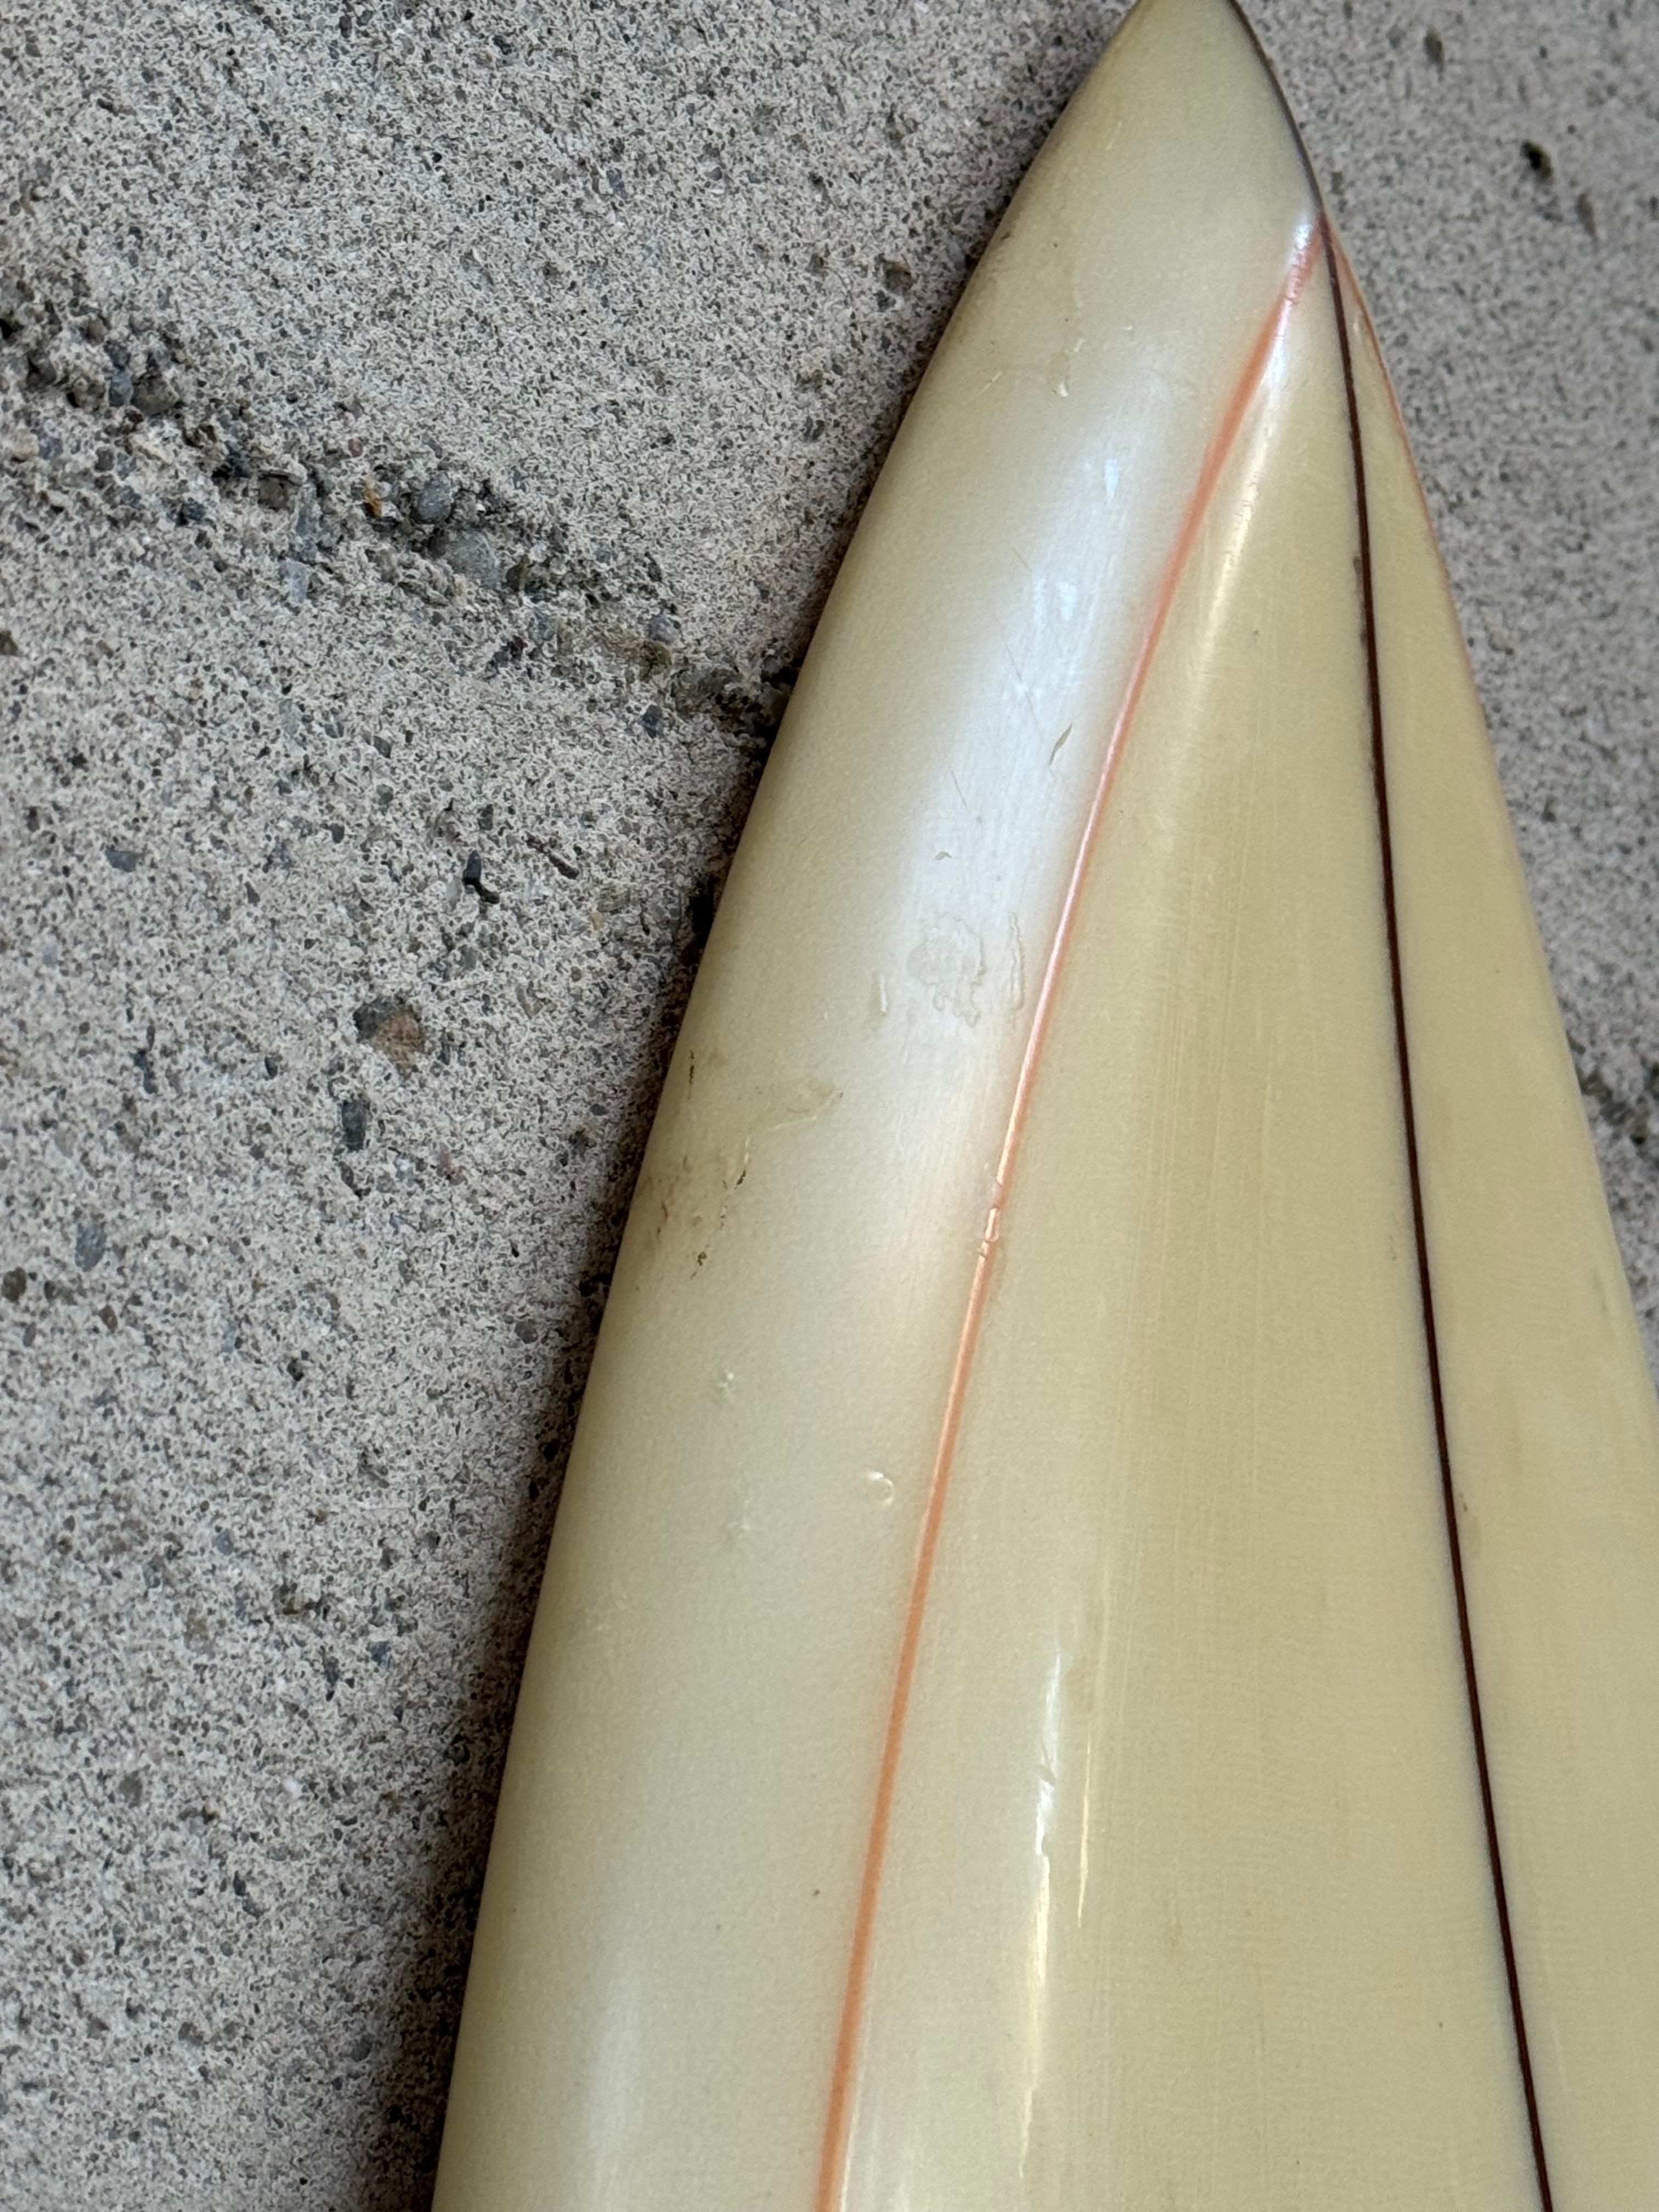 Resin 1970s Joey Thomas Single Fin Surfboard an Santa Cruz Surf History Artifact For Sale